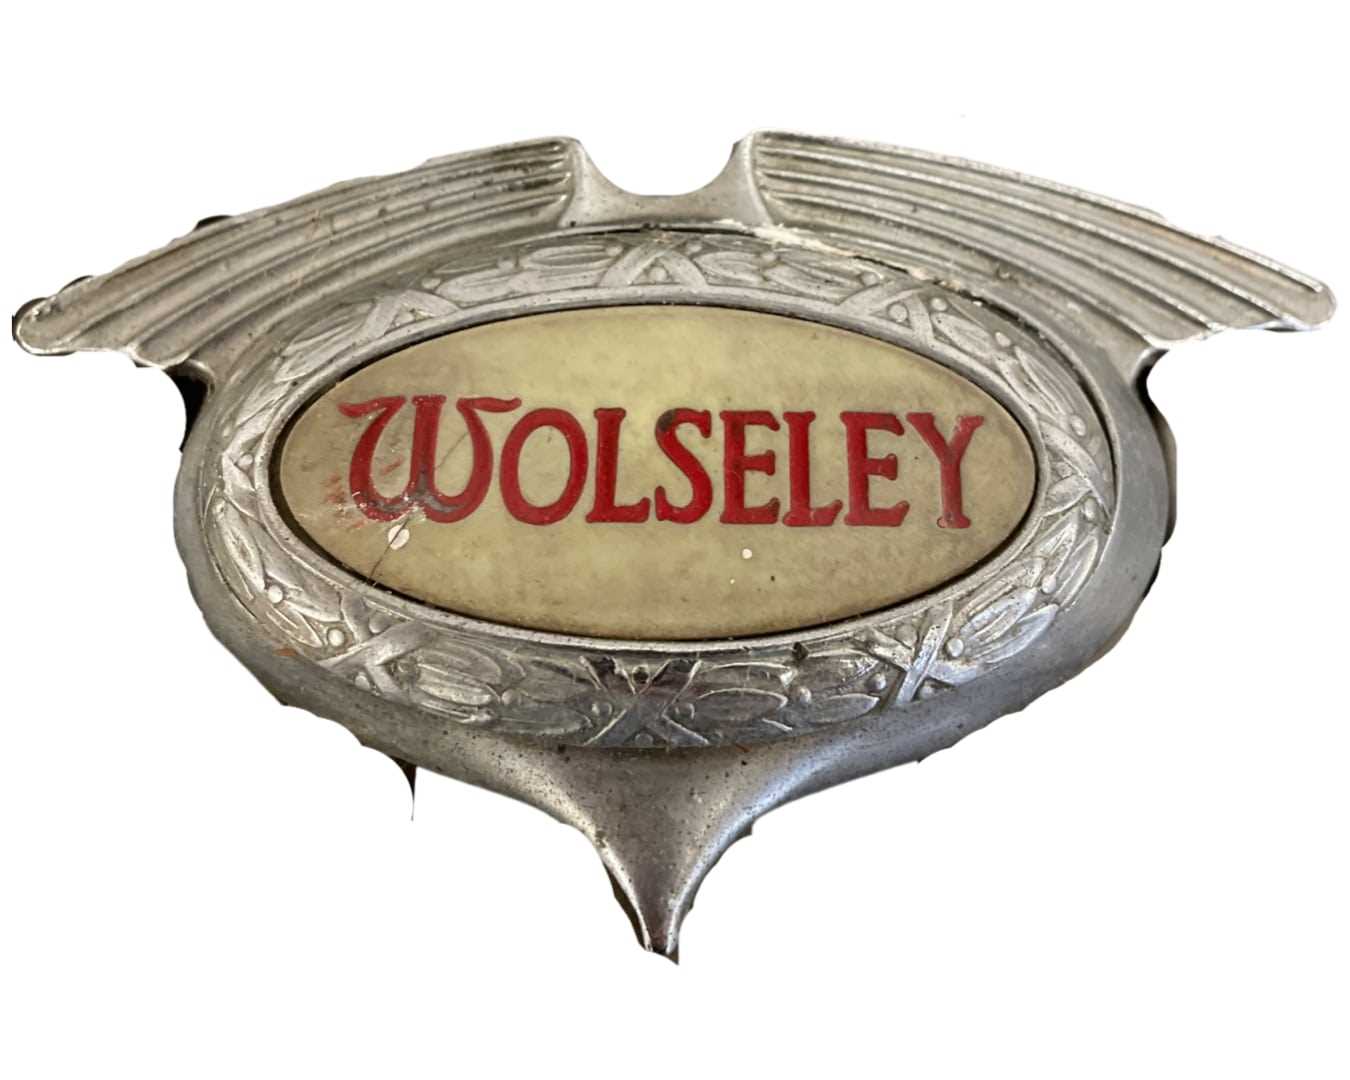 Wolsley radiator grill - Image 3 of 3